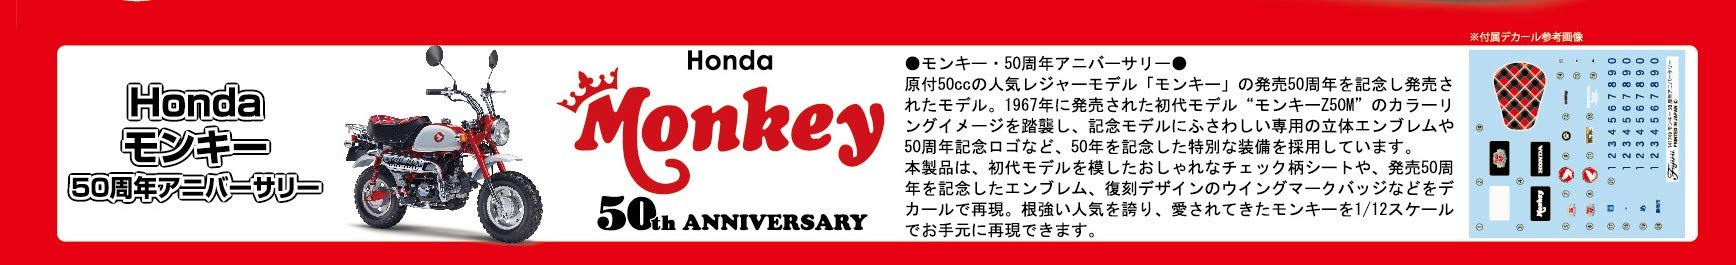 Fujimi Bike-Sp Honda Monkey 50th Anniversary Special 1/12 Japanese Scale Motorcycle